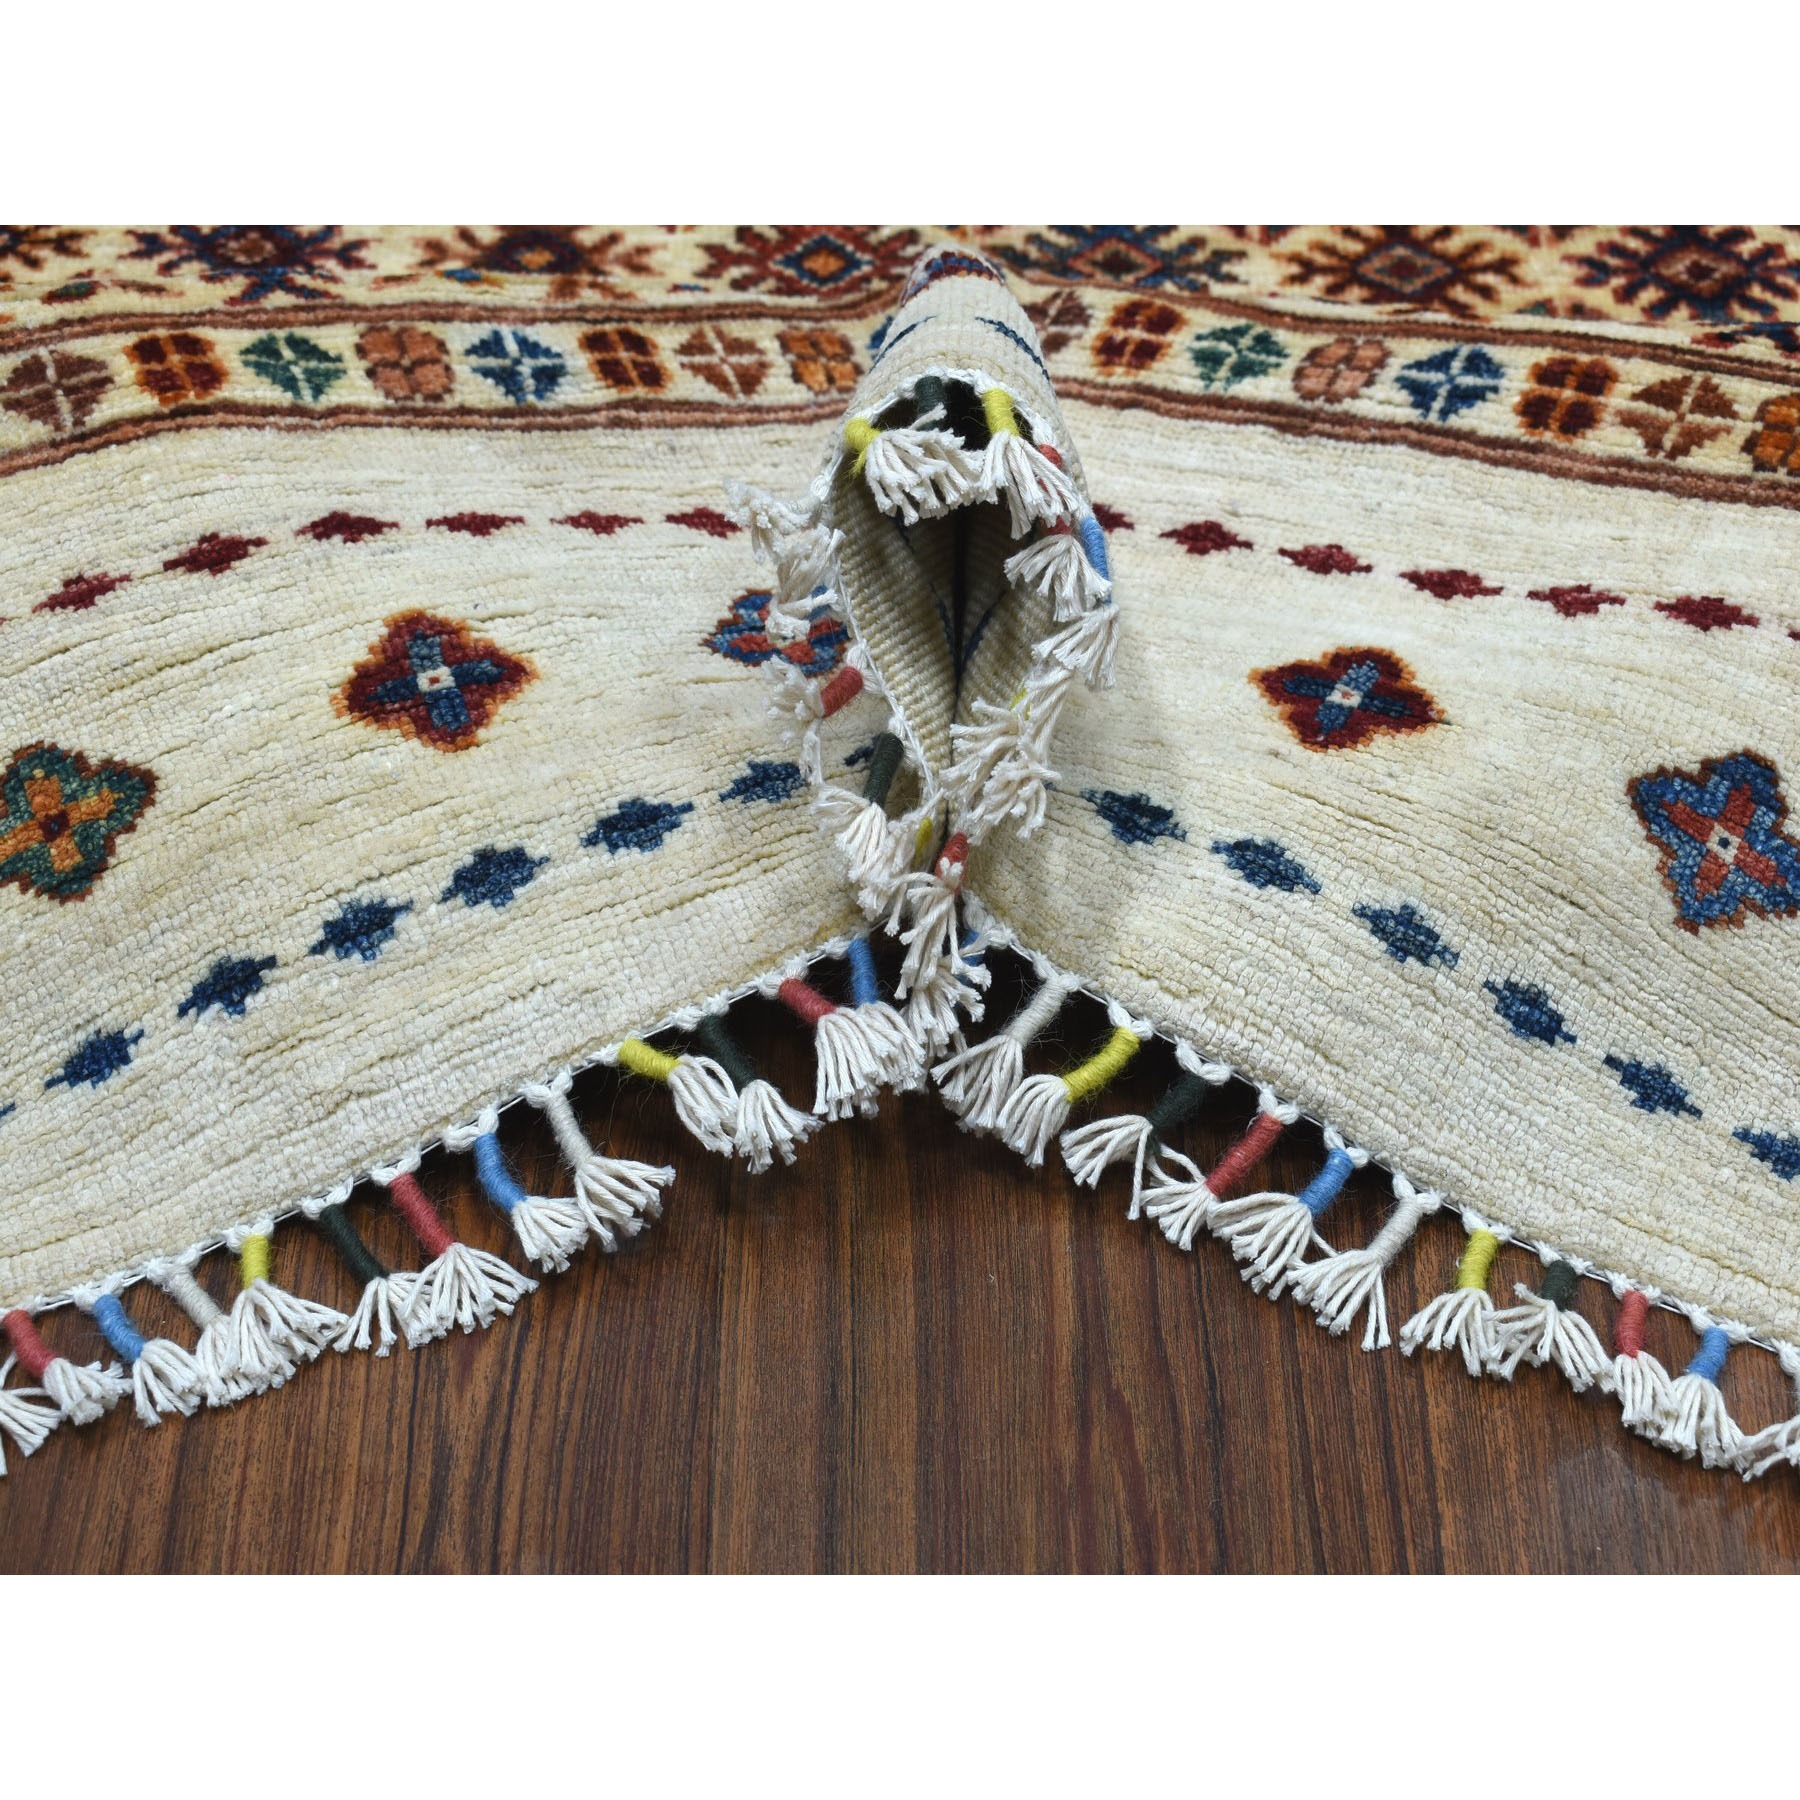 8-3 x9-8  Khorjin Design Ivory Super Kazak Pure Wool Hand Knotted Oriental Rug 